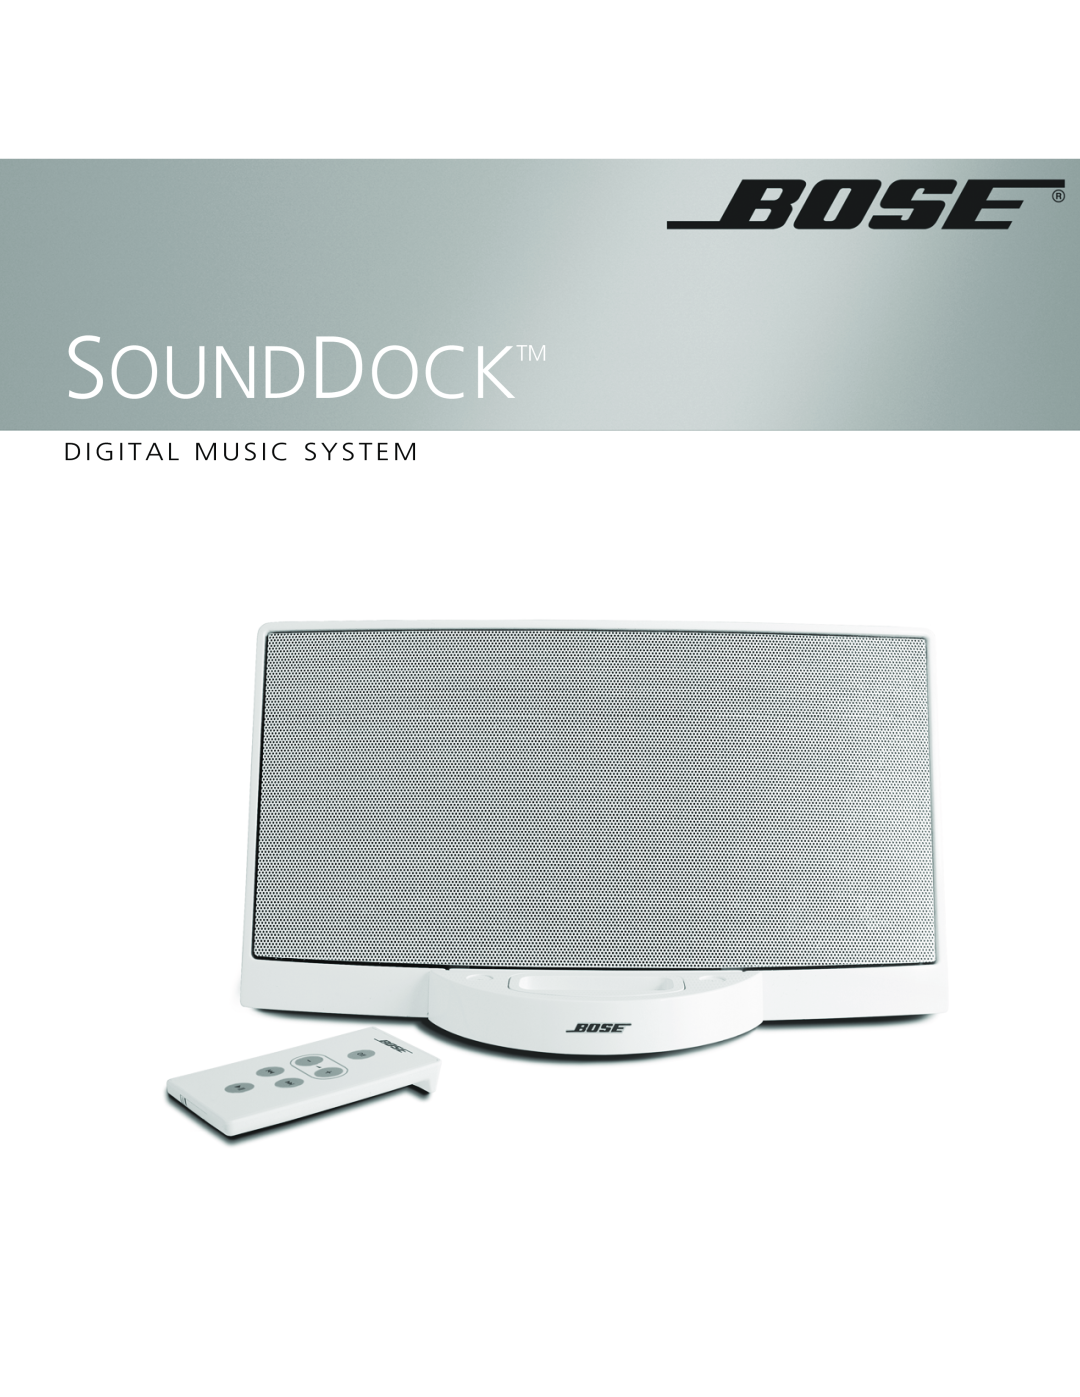 Bose SoundDock manual Sounddocktm, D I G I T A L M U S I C S Y S T E M 